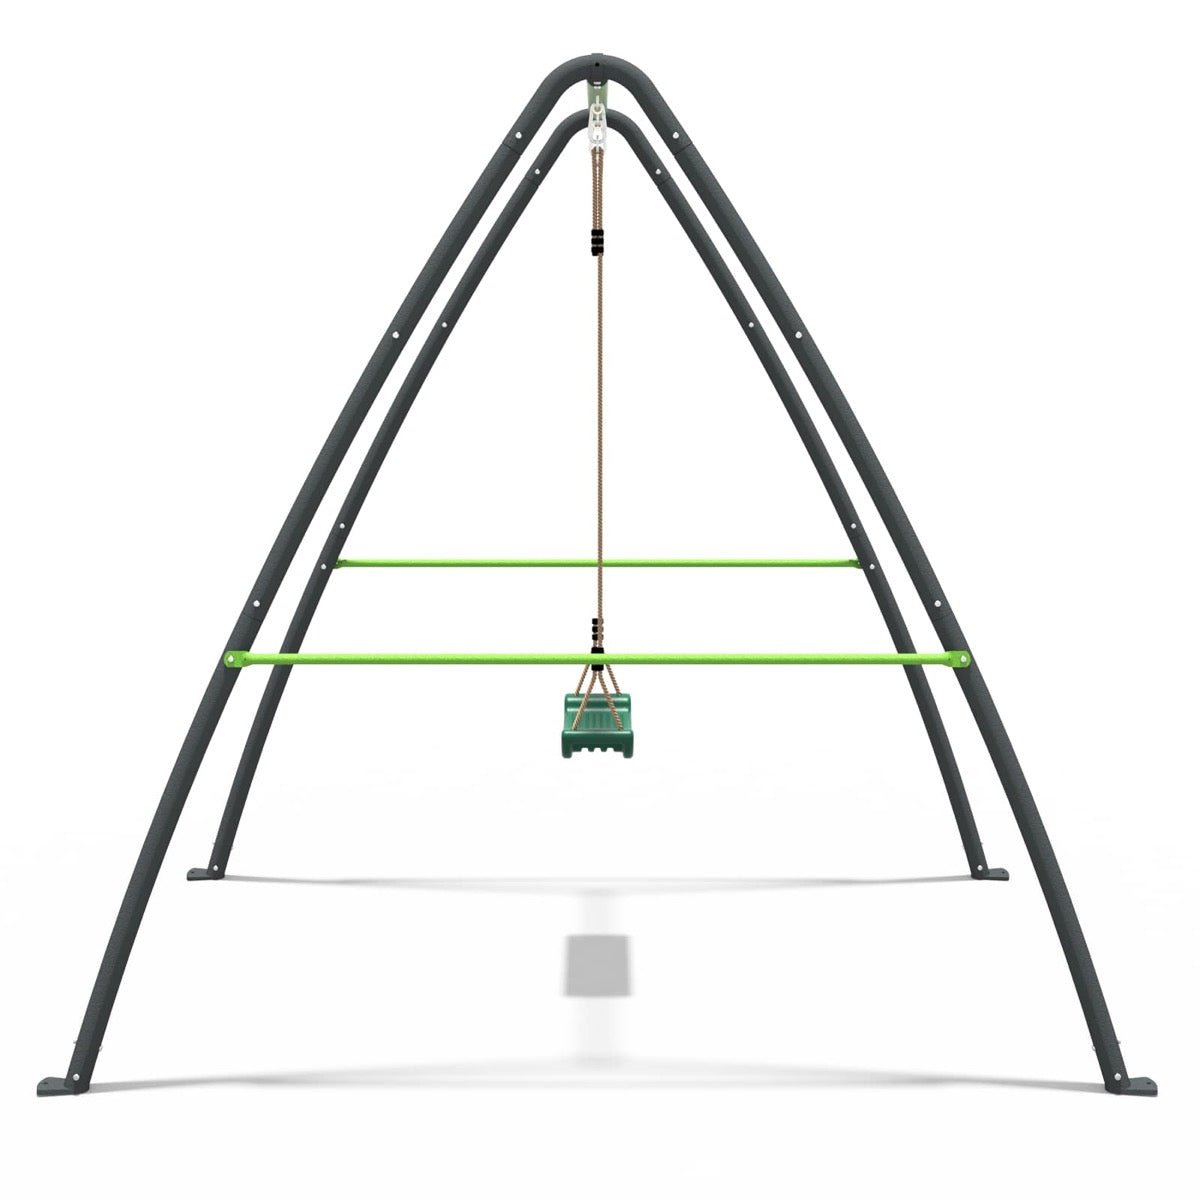 Rebo Steel Series Metal Swing Set - Single Swing Green